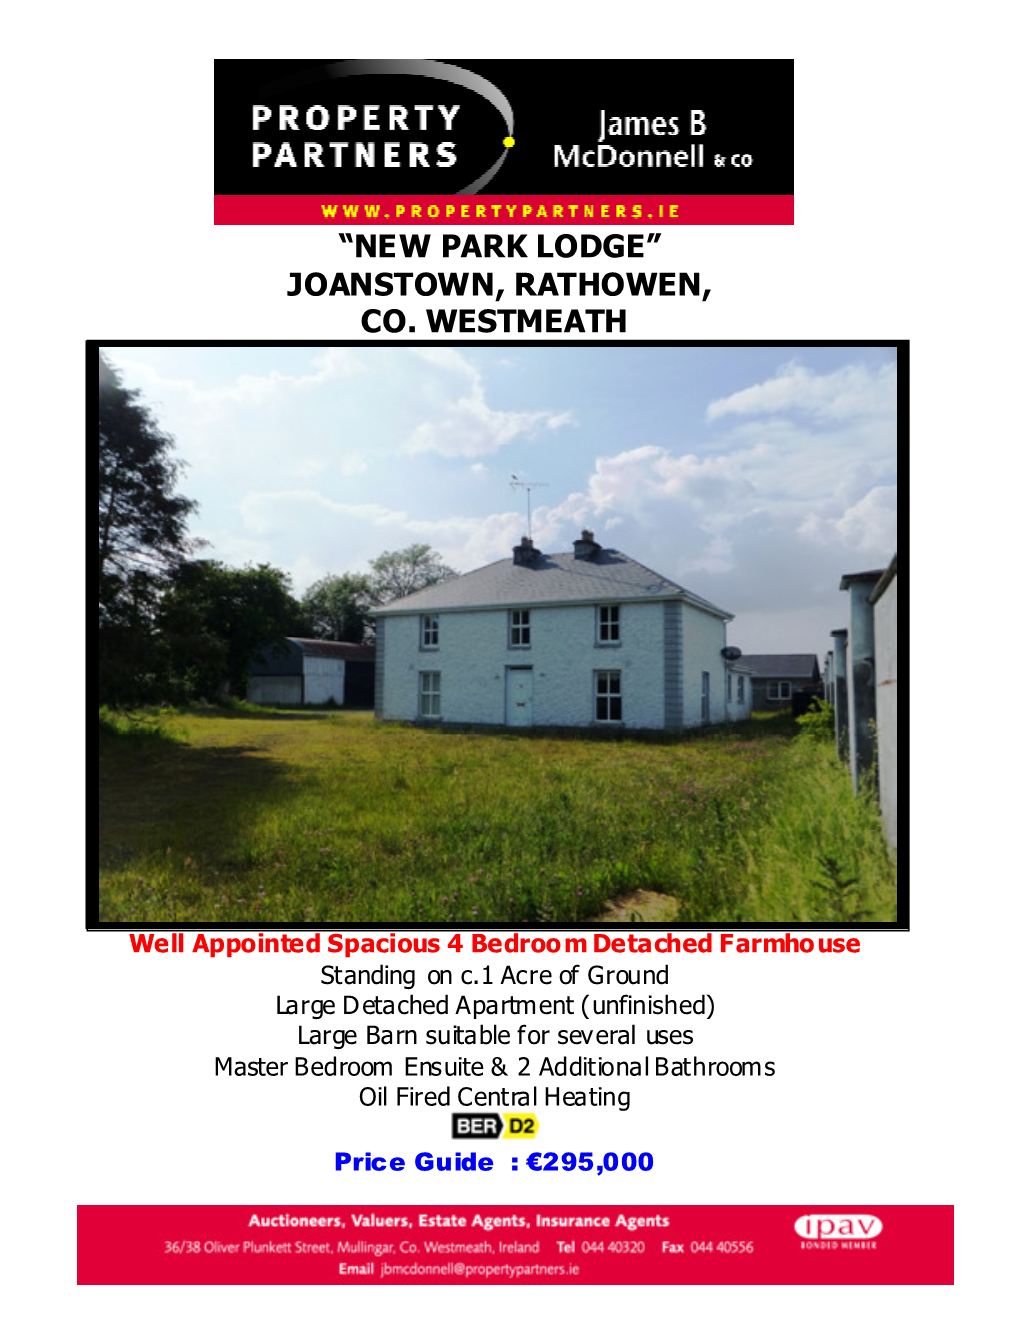 “New Park Lodge” Joanstown, Rathowen, Co. Westmeath